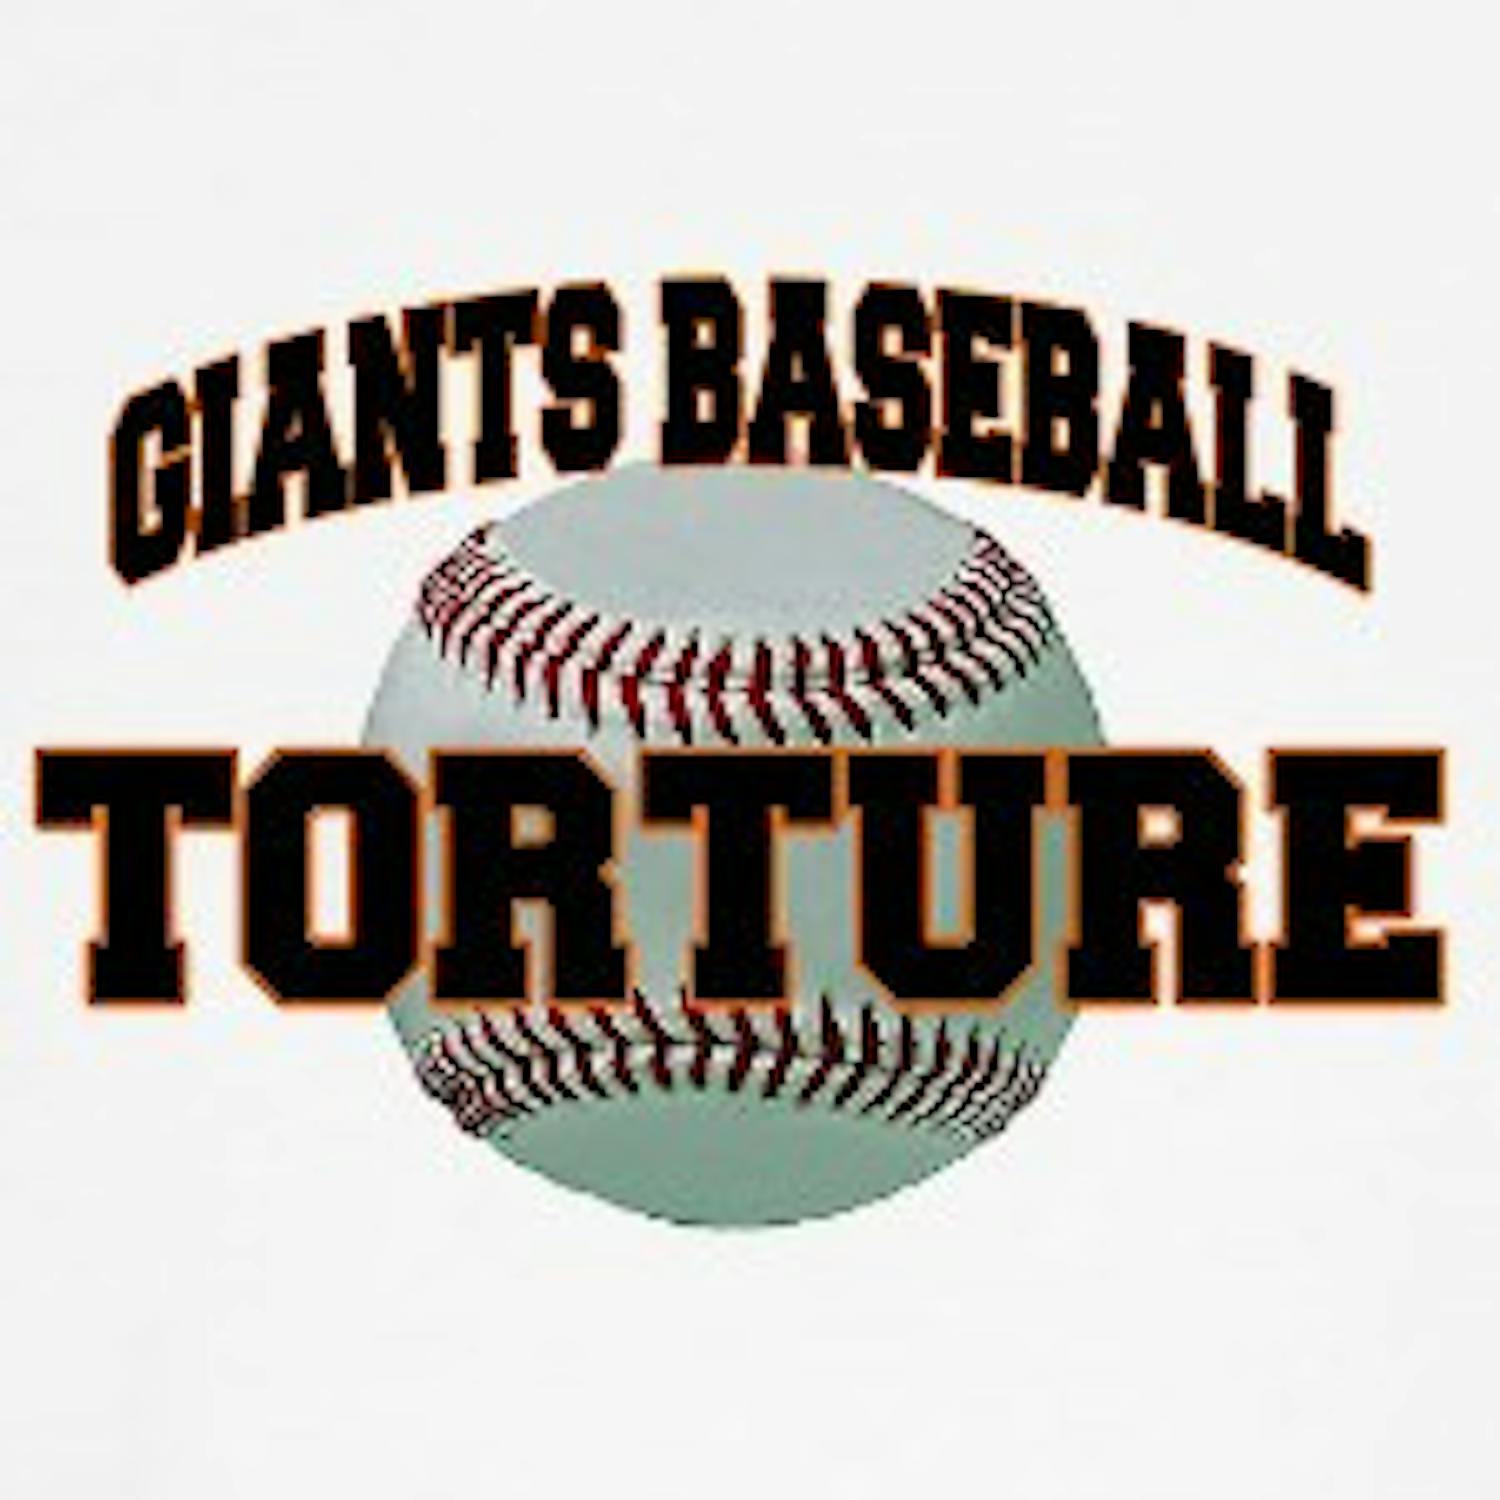 Giants-baseball-torture-2